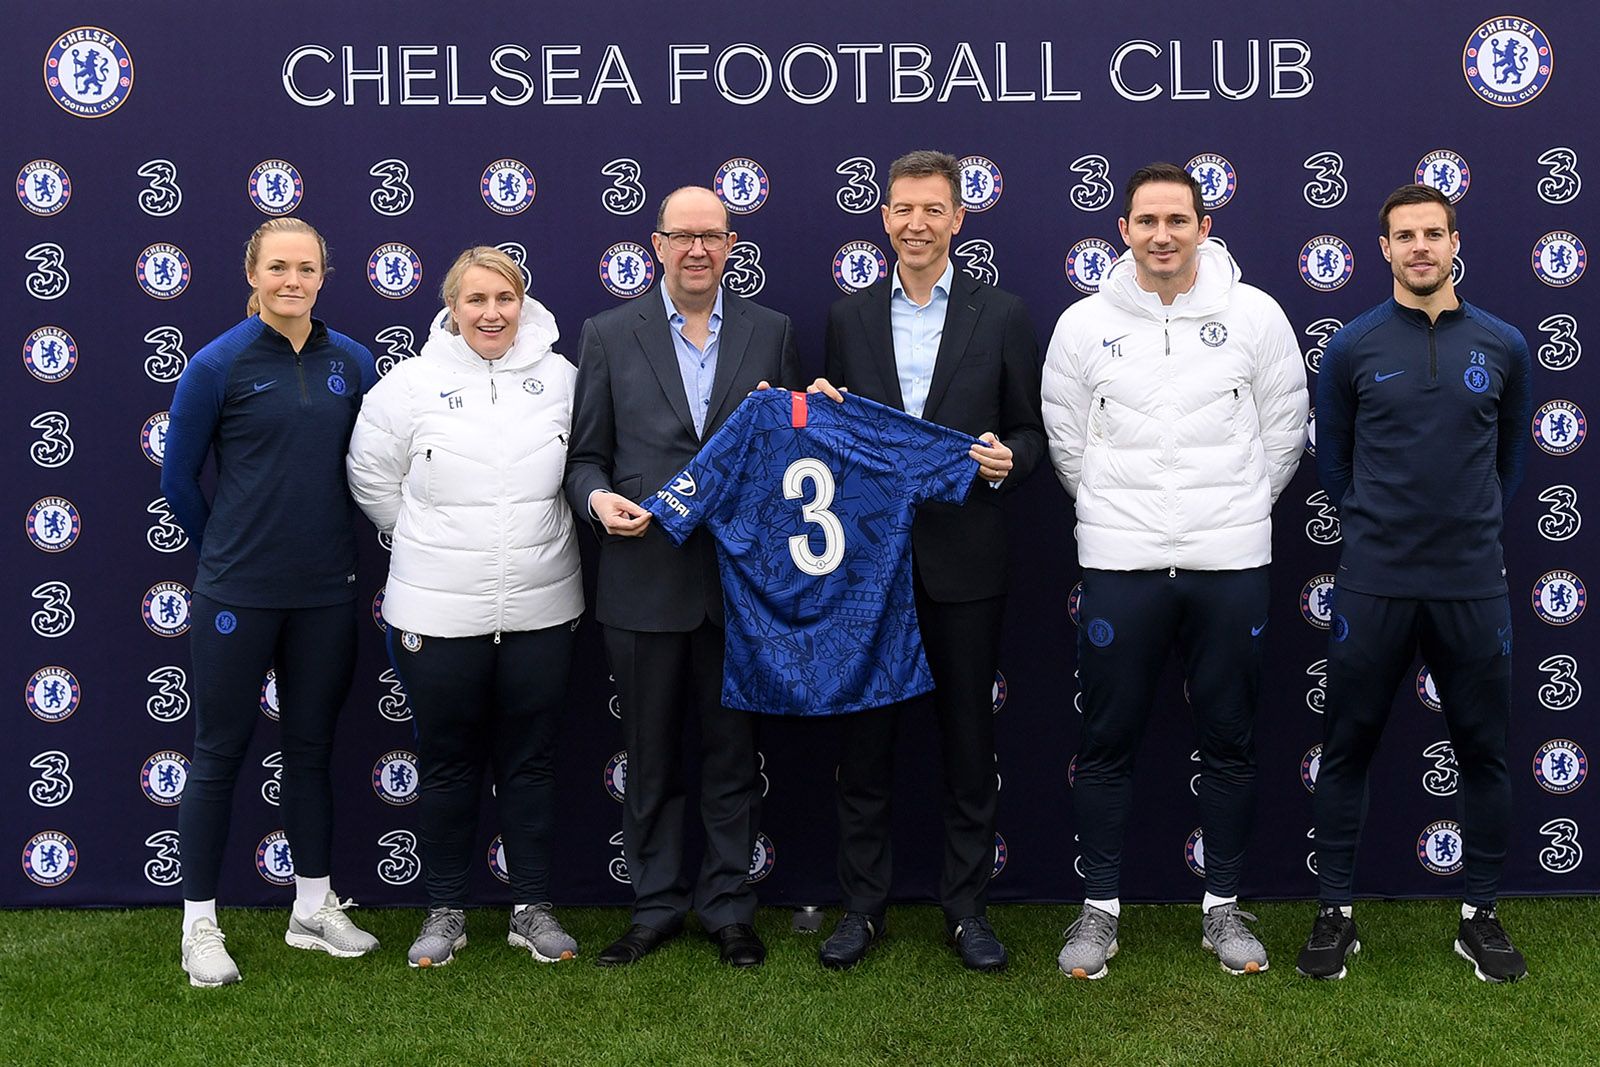 Threes Chelsea Shirt Sponsorship Includes 5g-enabled Stamford Bridge image 1